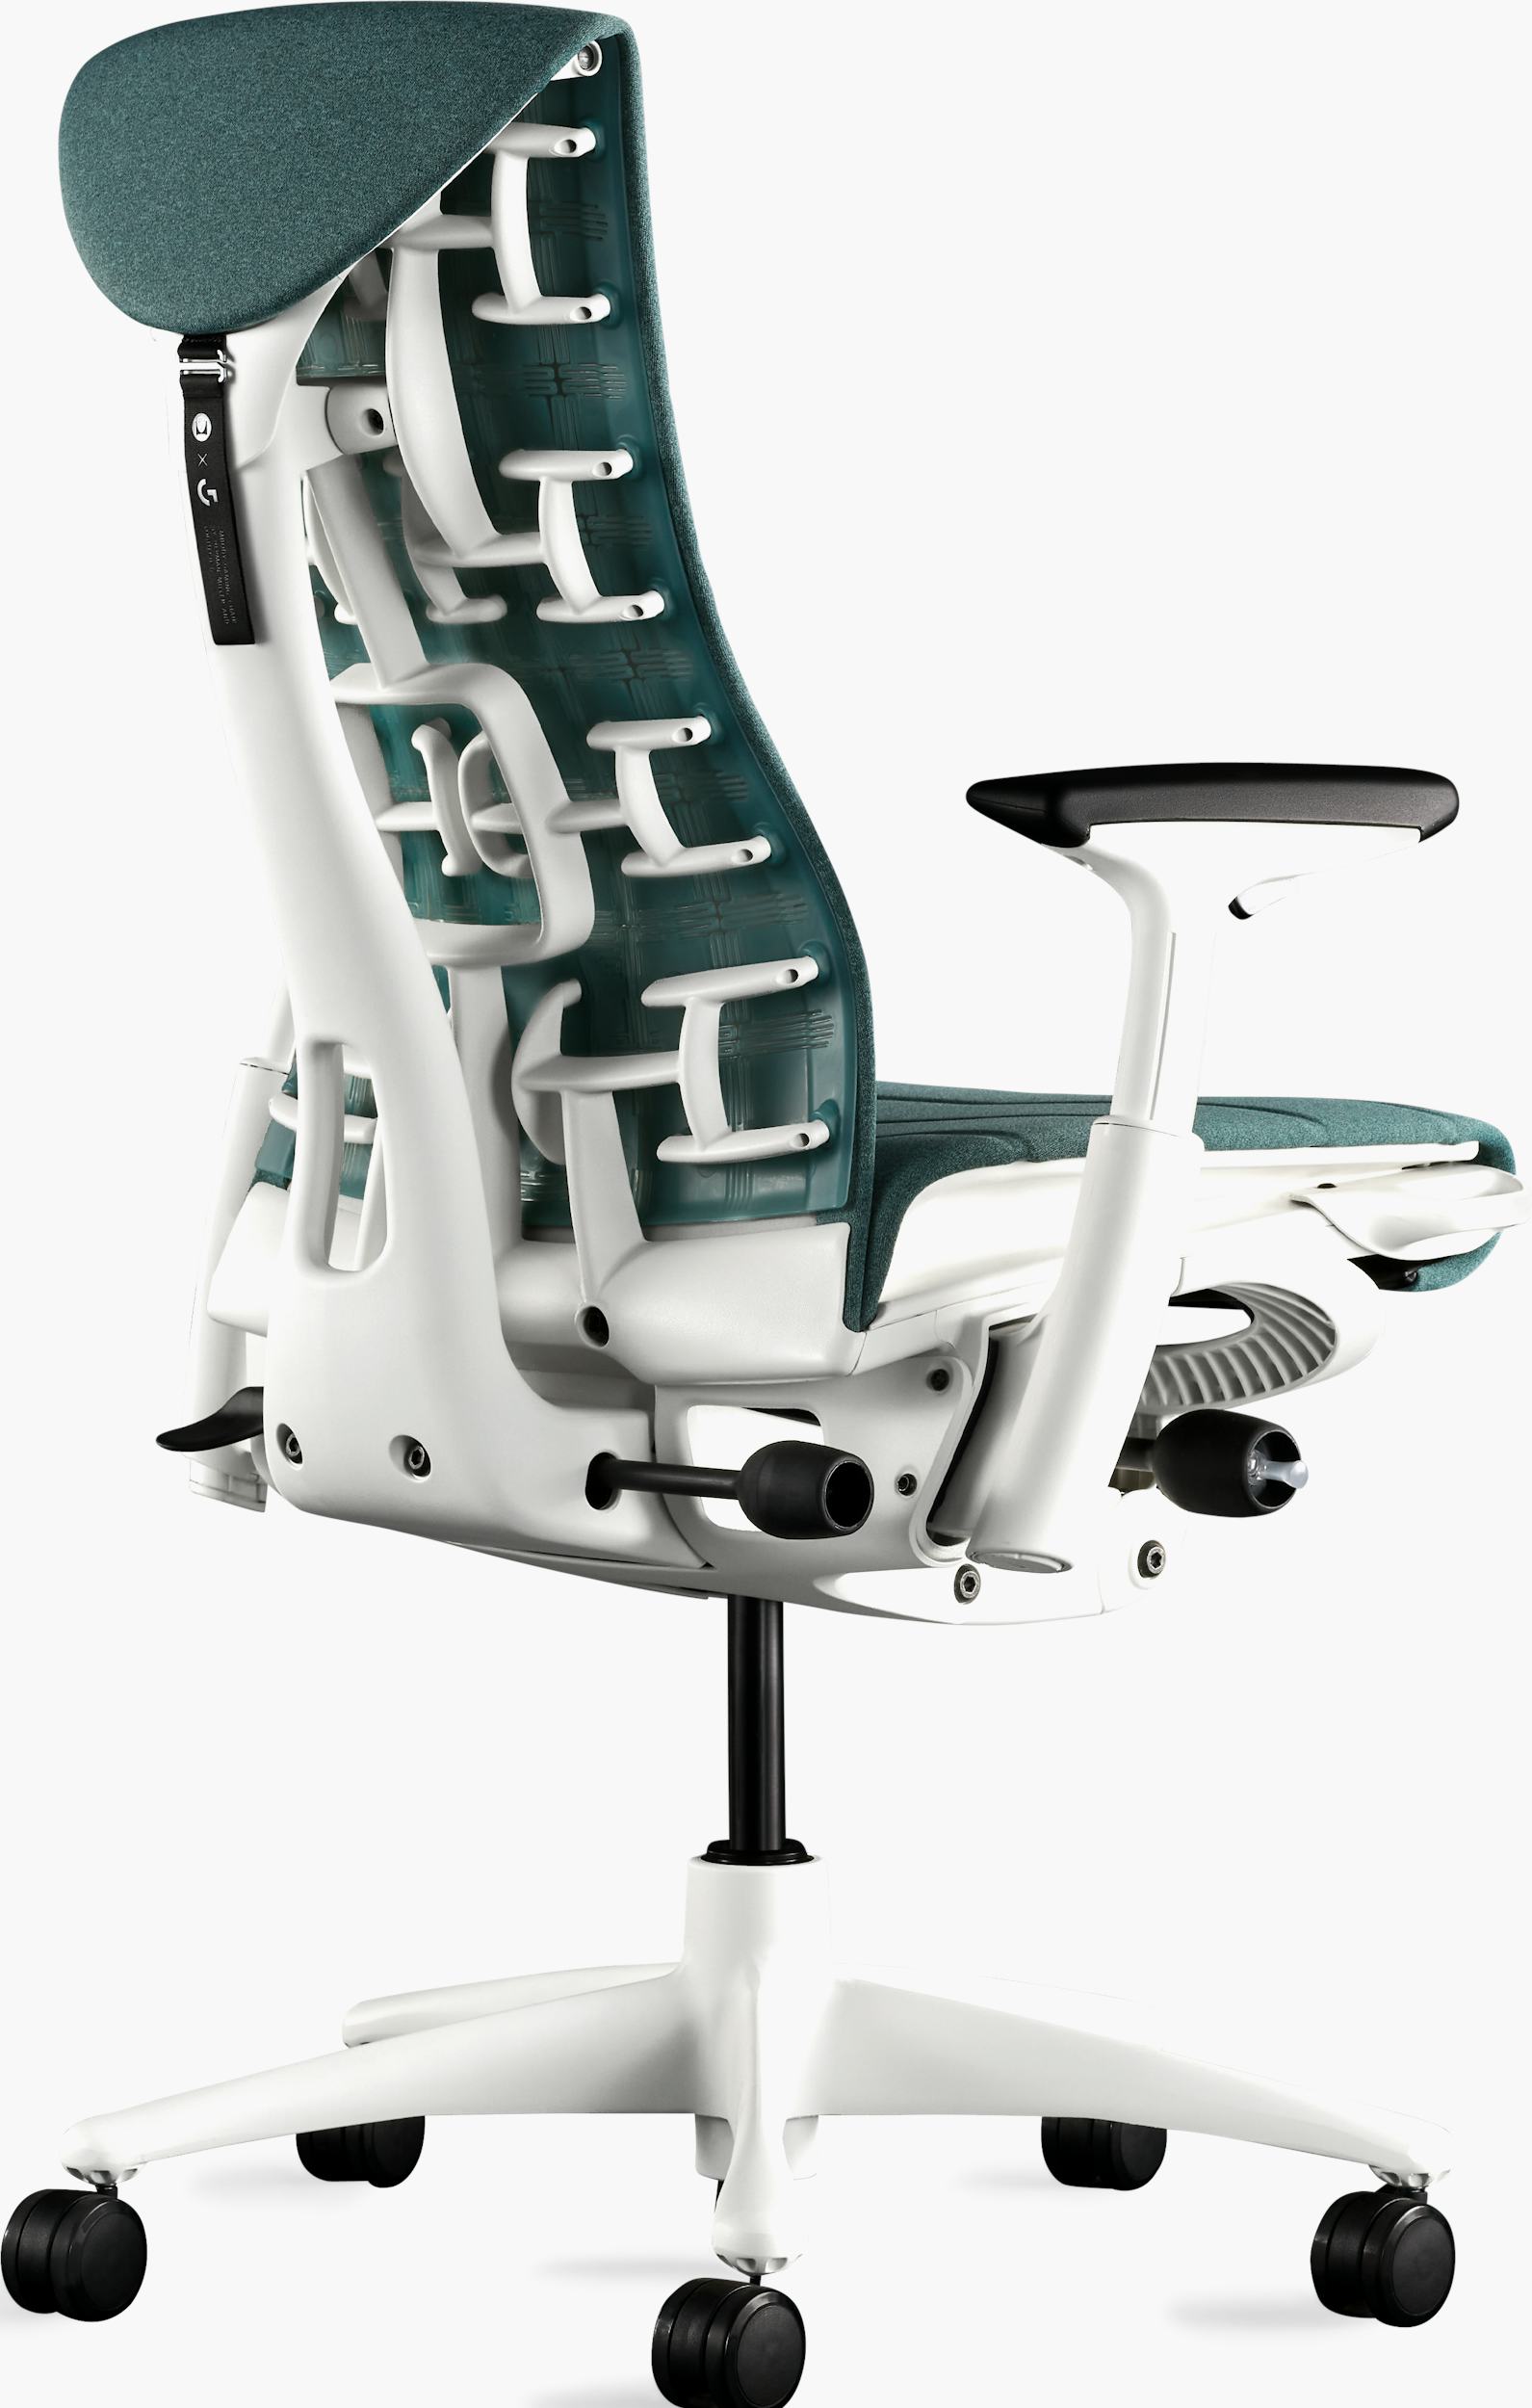 Flow LB Desk Chair - White - Scan Design